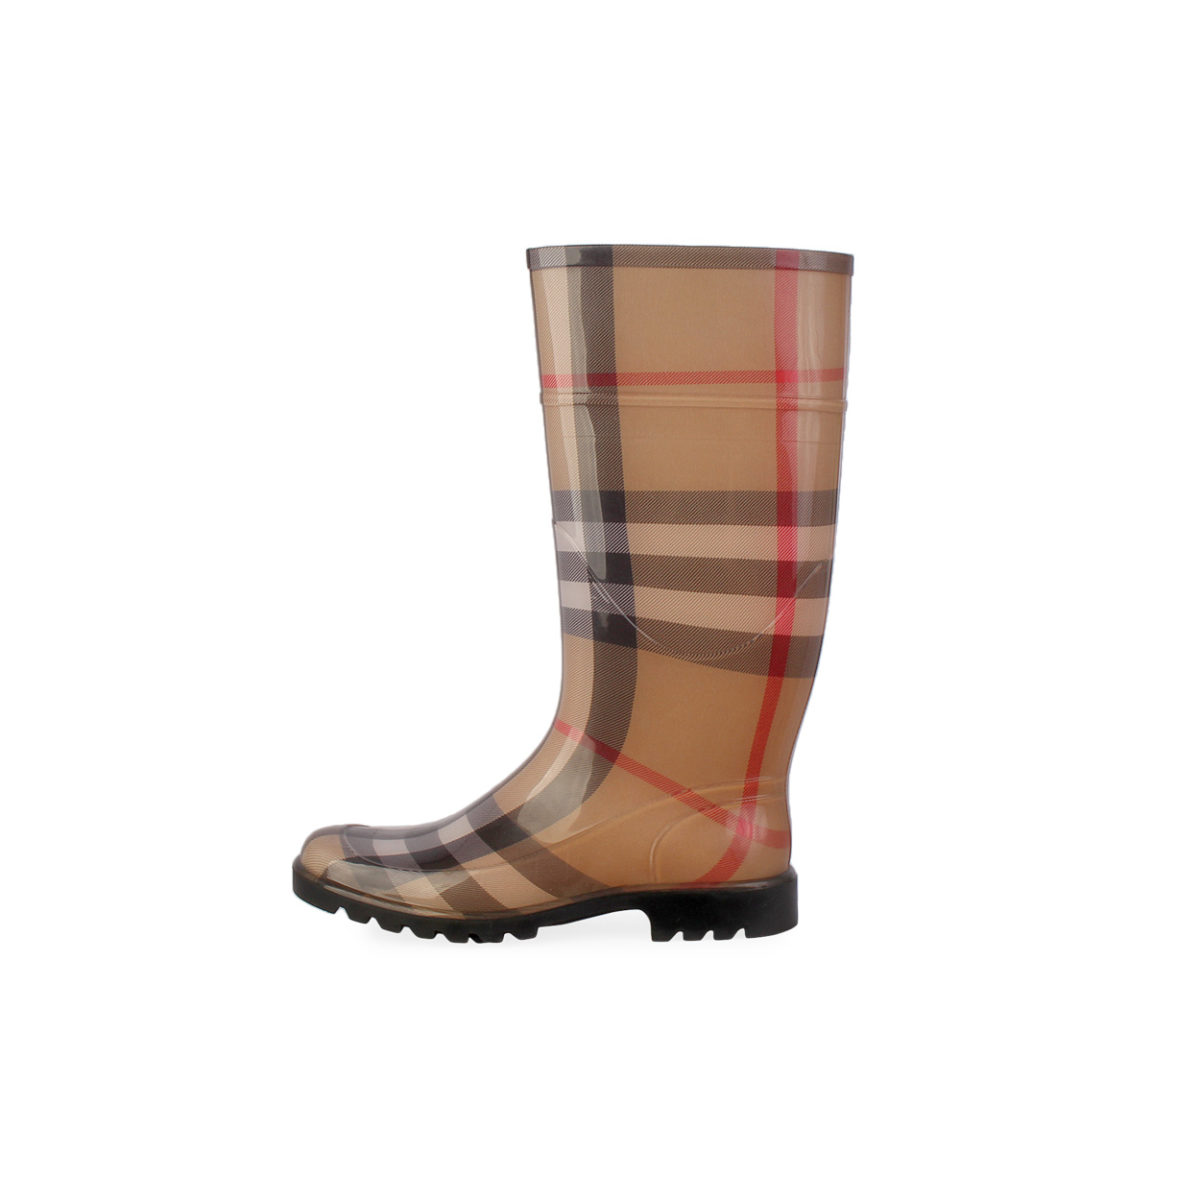 burberry rain boots kids price